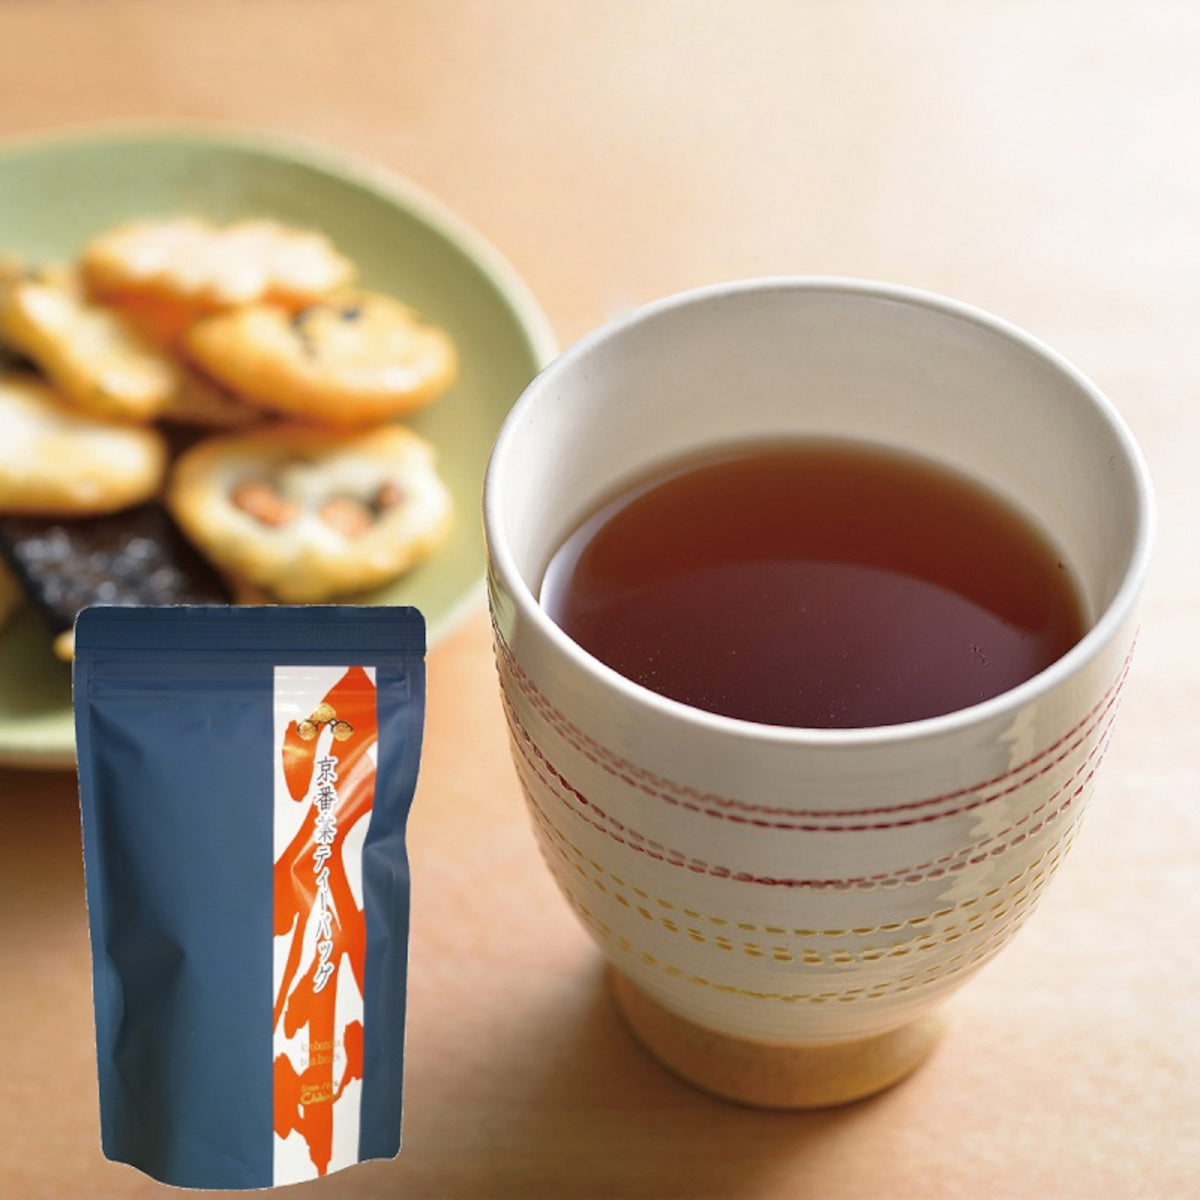 Kyobancha (roasted Japanese green tea) - 2g x 30 Tea bags